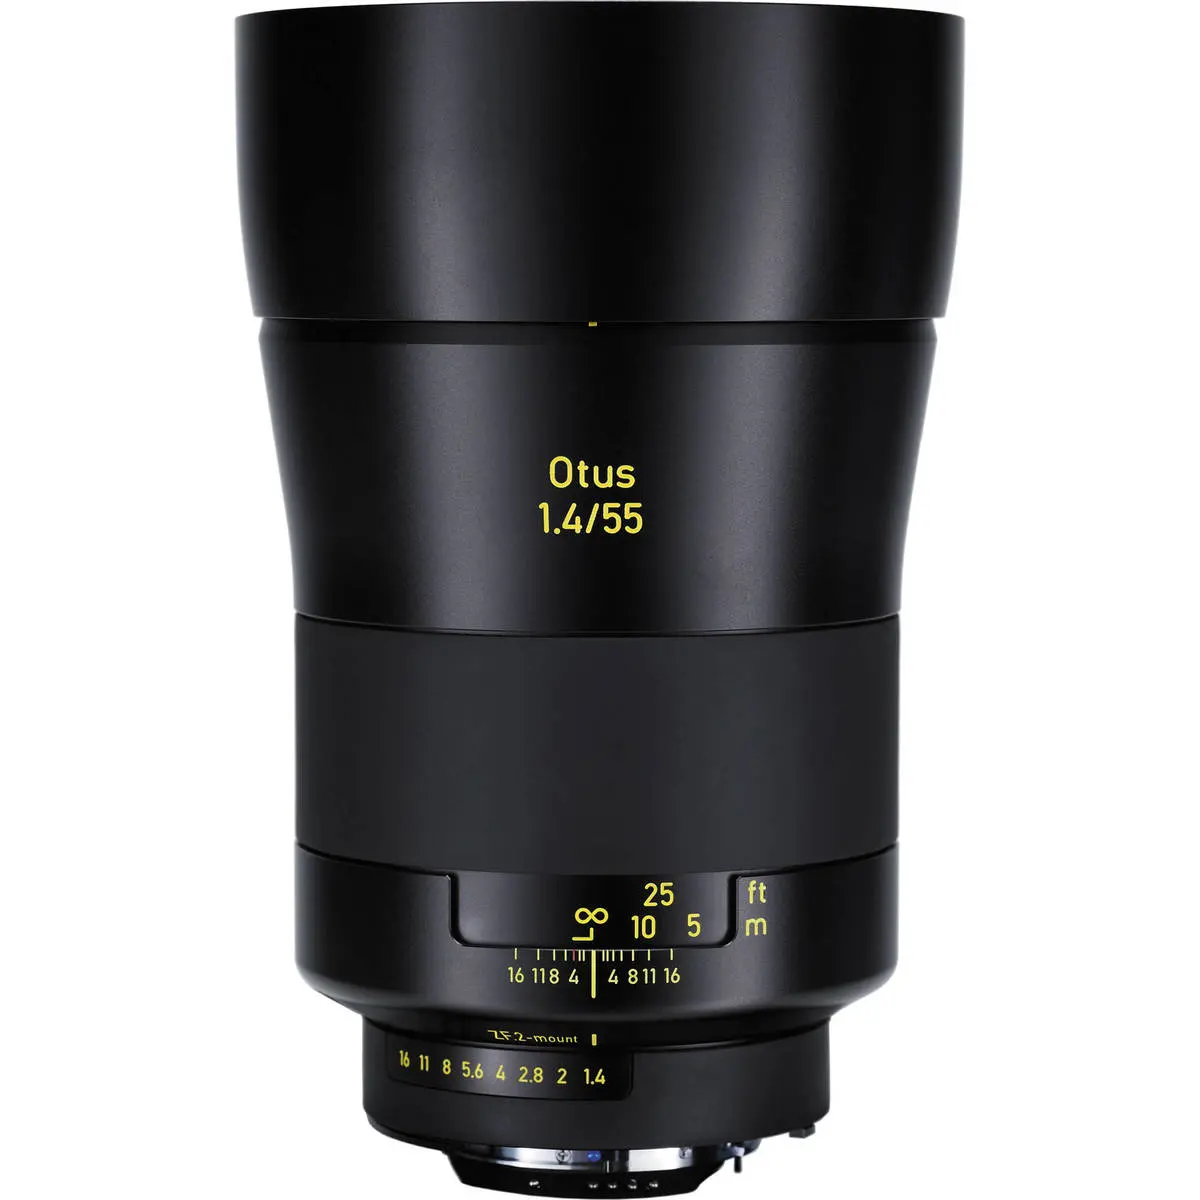 3. Carl Zeiss Otus Distagon T* 1.4/55 ZF.2 (Nikon) Lens